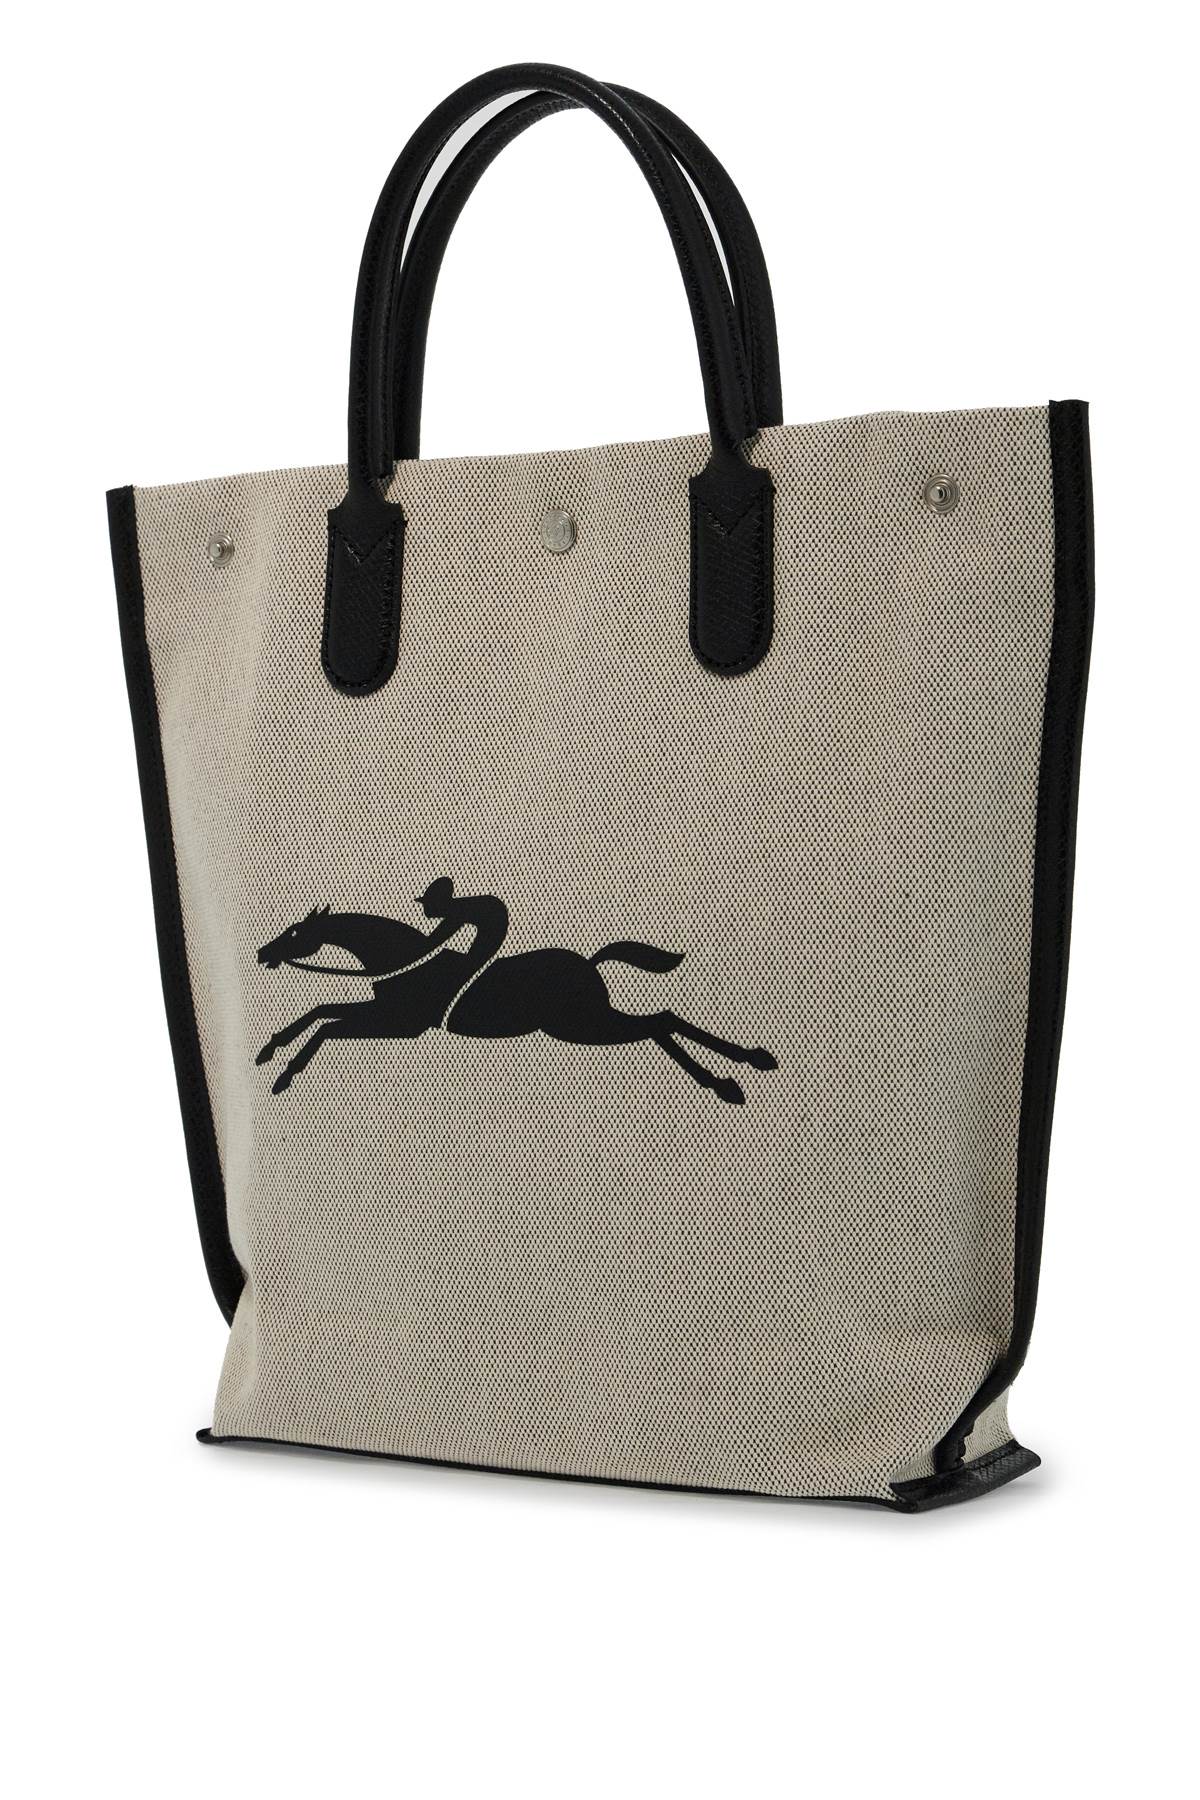 Longchamp tote bag m essential